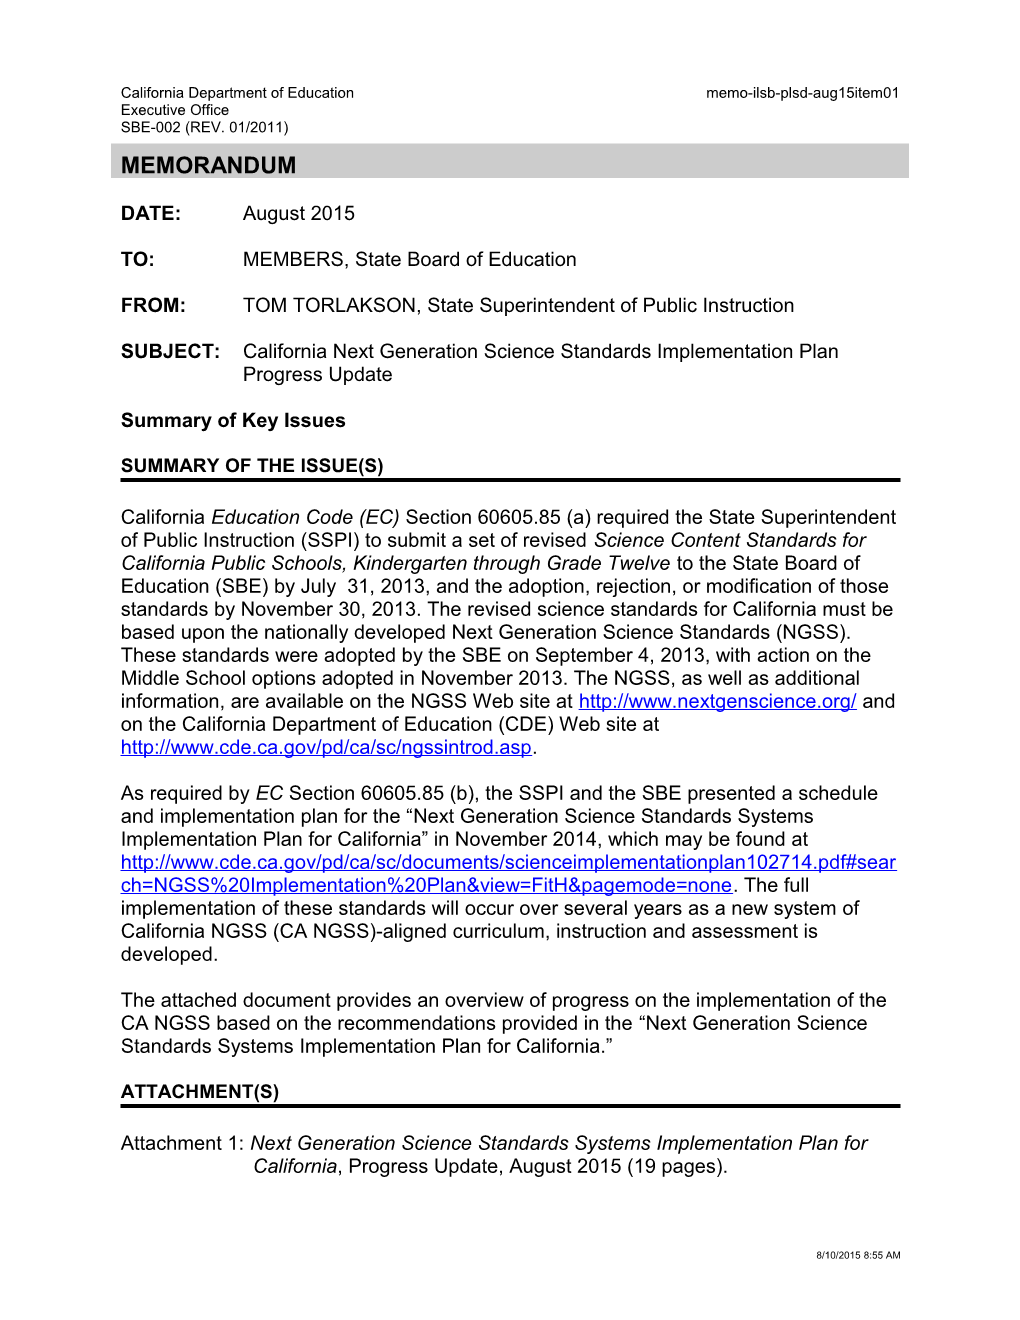 August 2015 Memo ILSB PLSD Item 01 - Information Memorandum (CA State Board of Education)